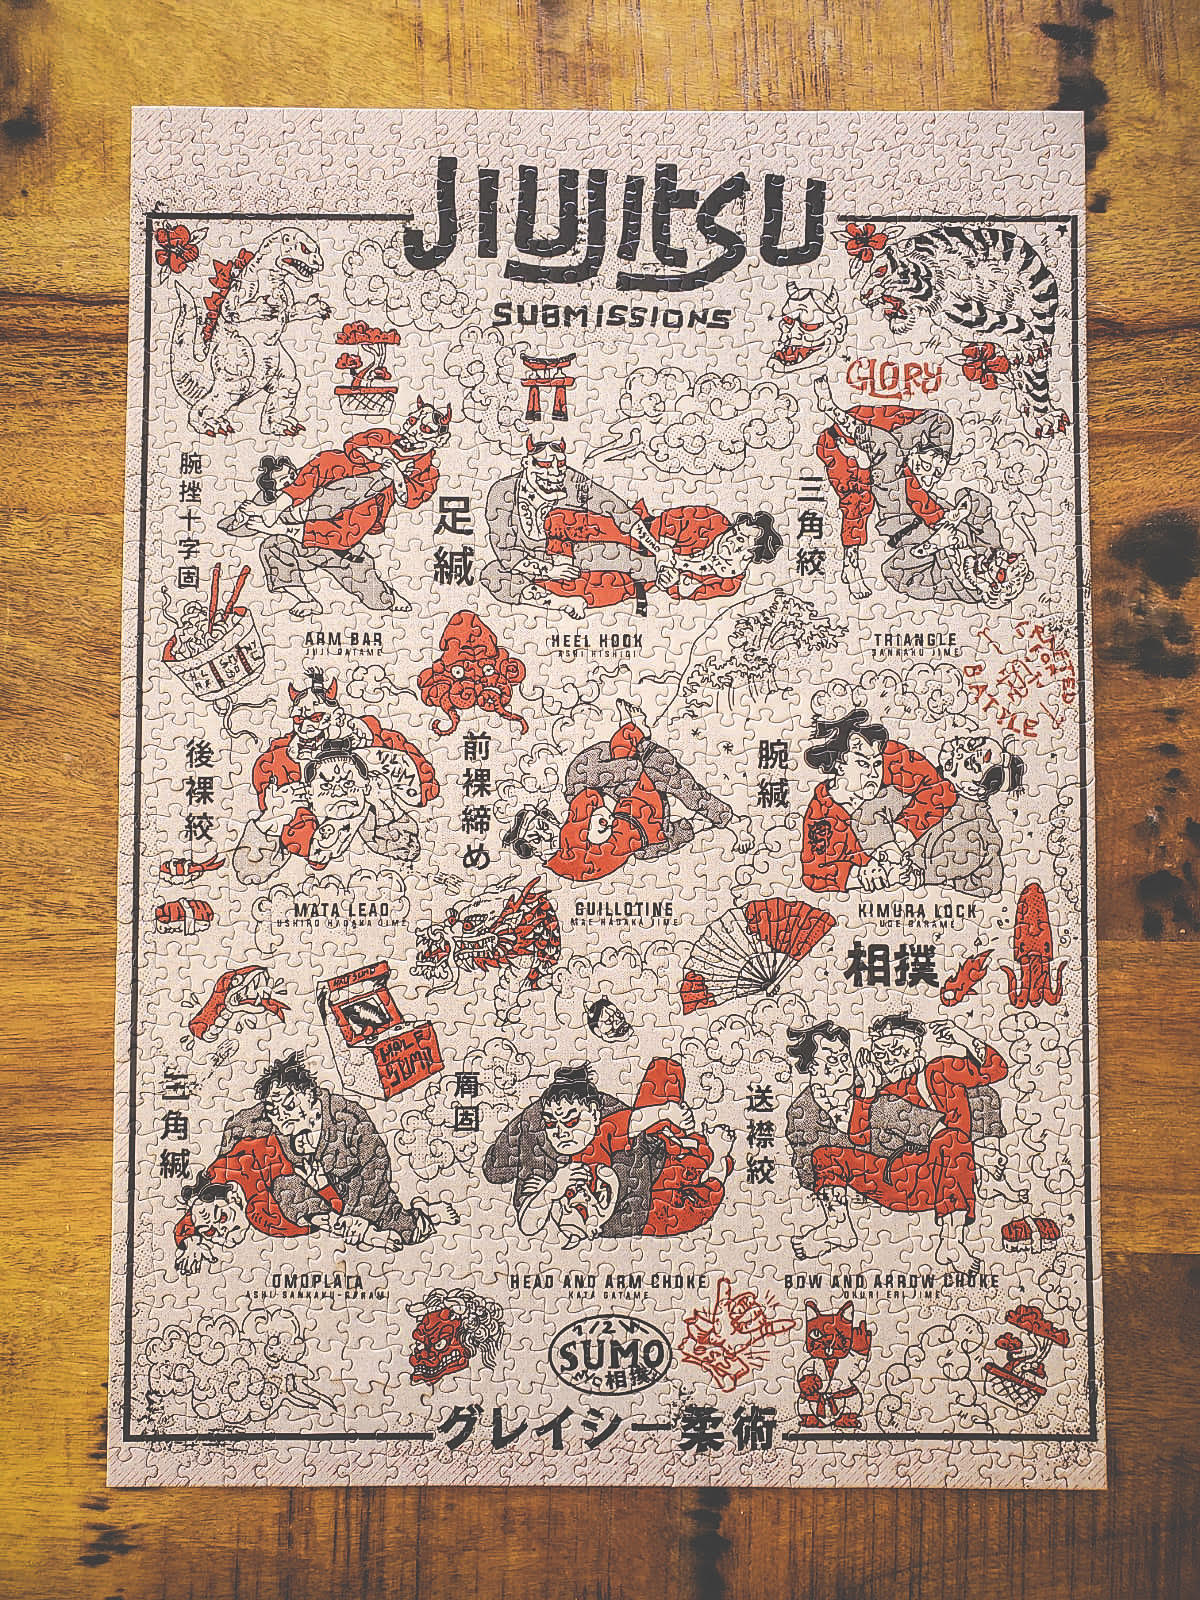 jiu jitsu submissions poster